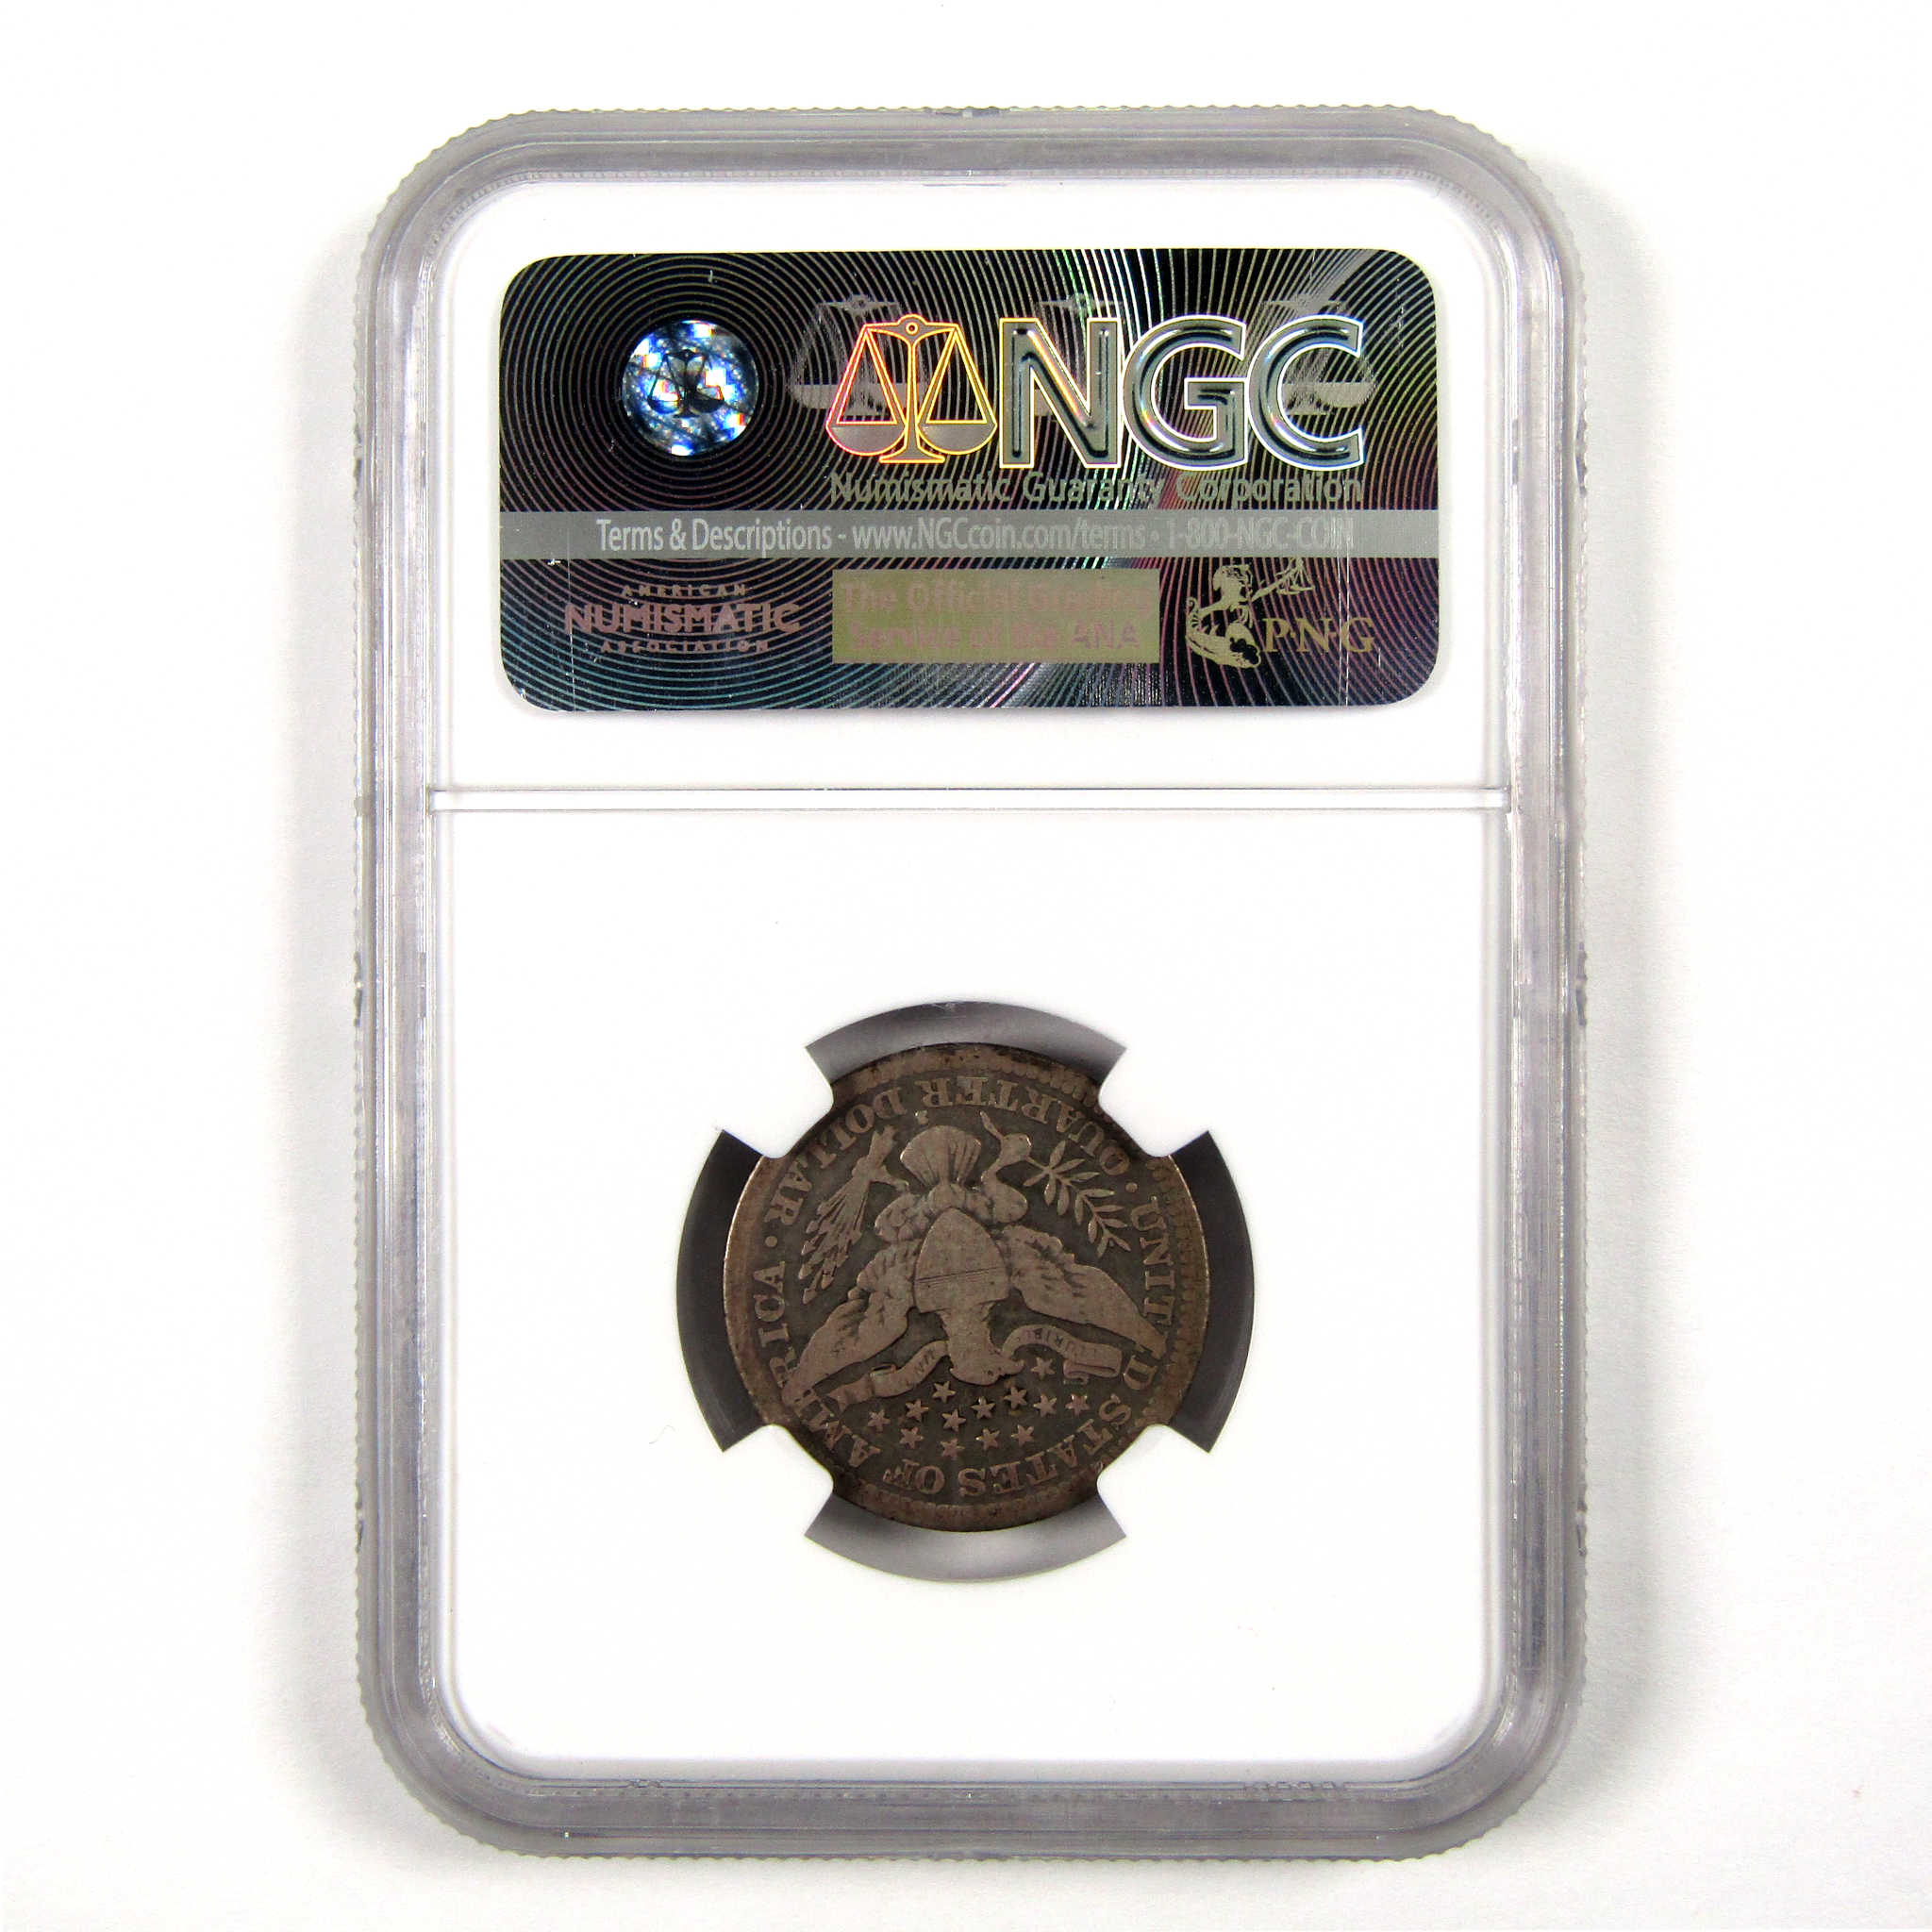 1914 S Barber Quarter VG 8 NGC 90% Silver 25c Coin SKU:I9110